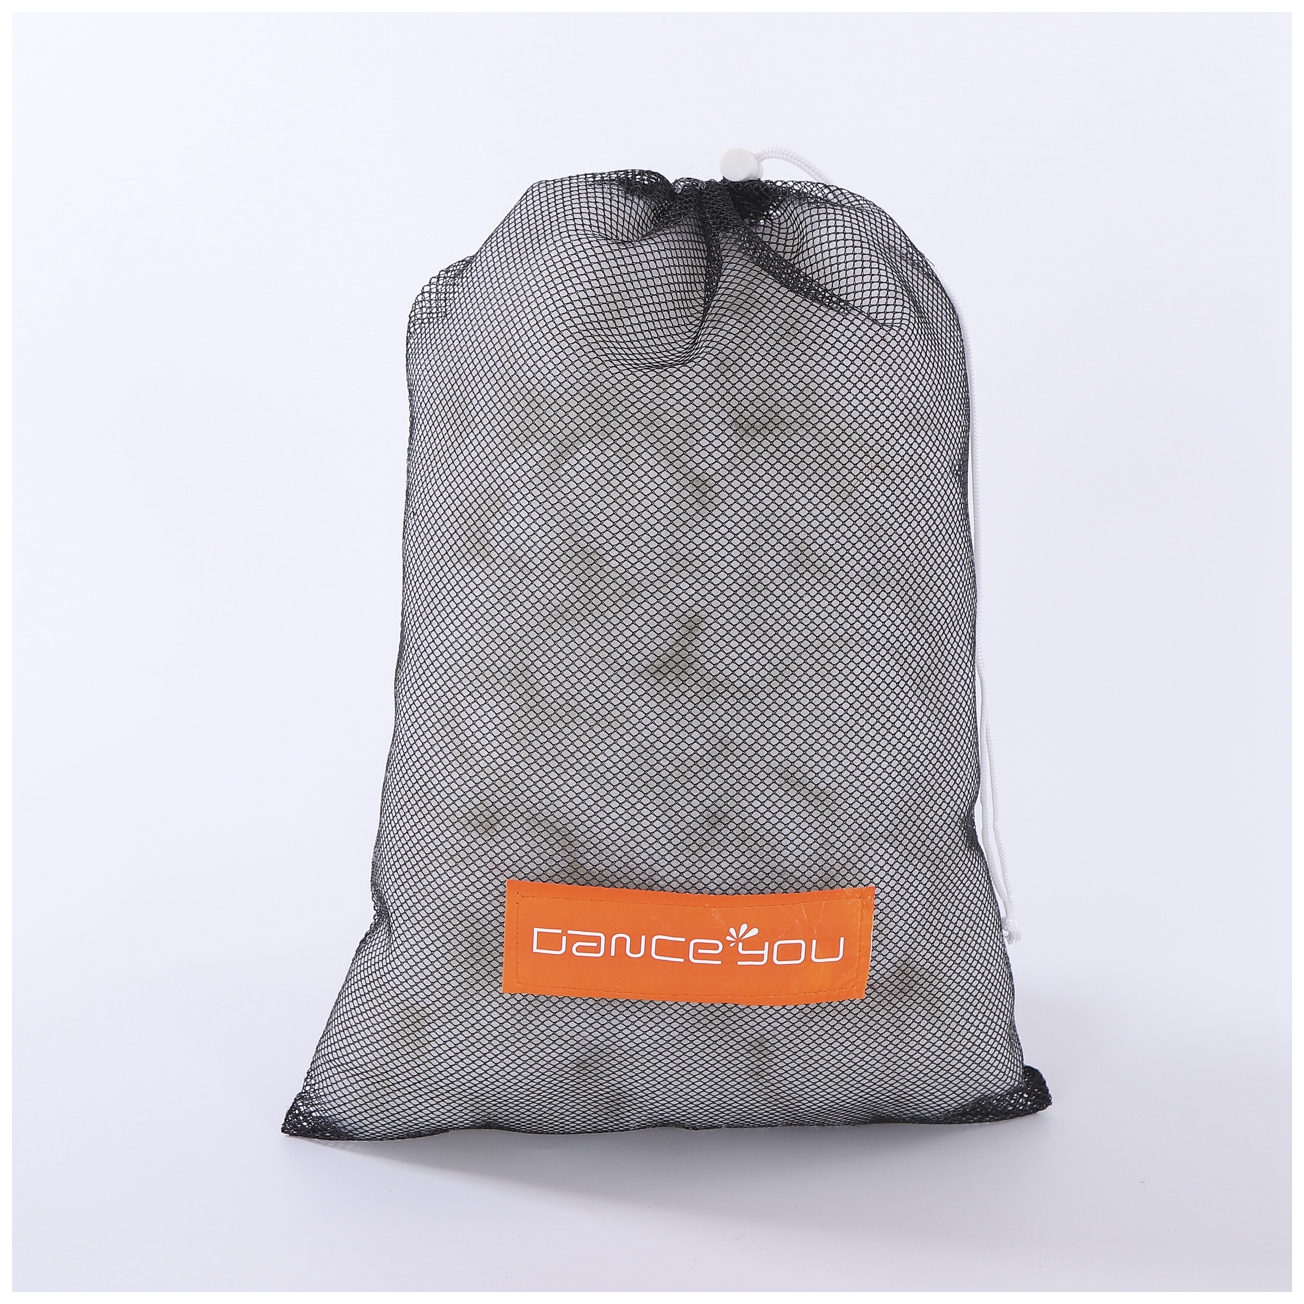 Reusable drawstring mesh bag 